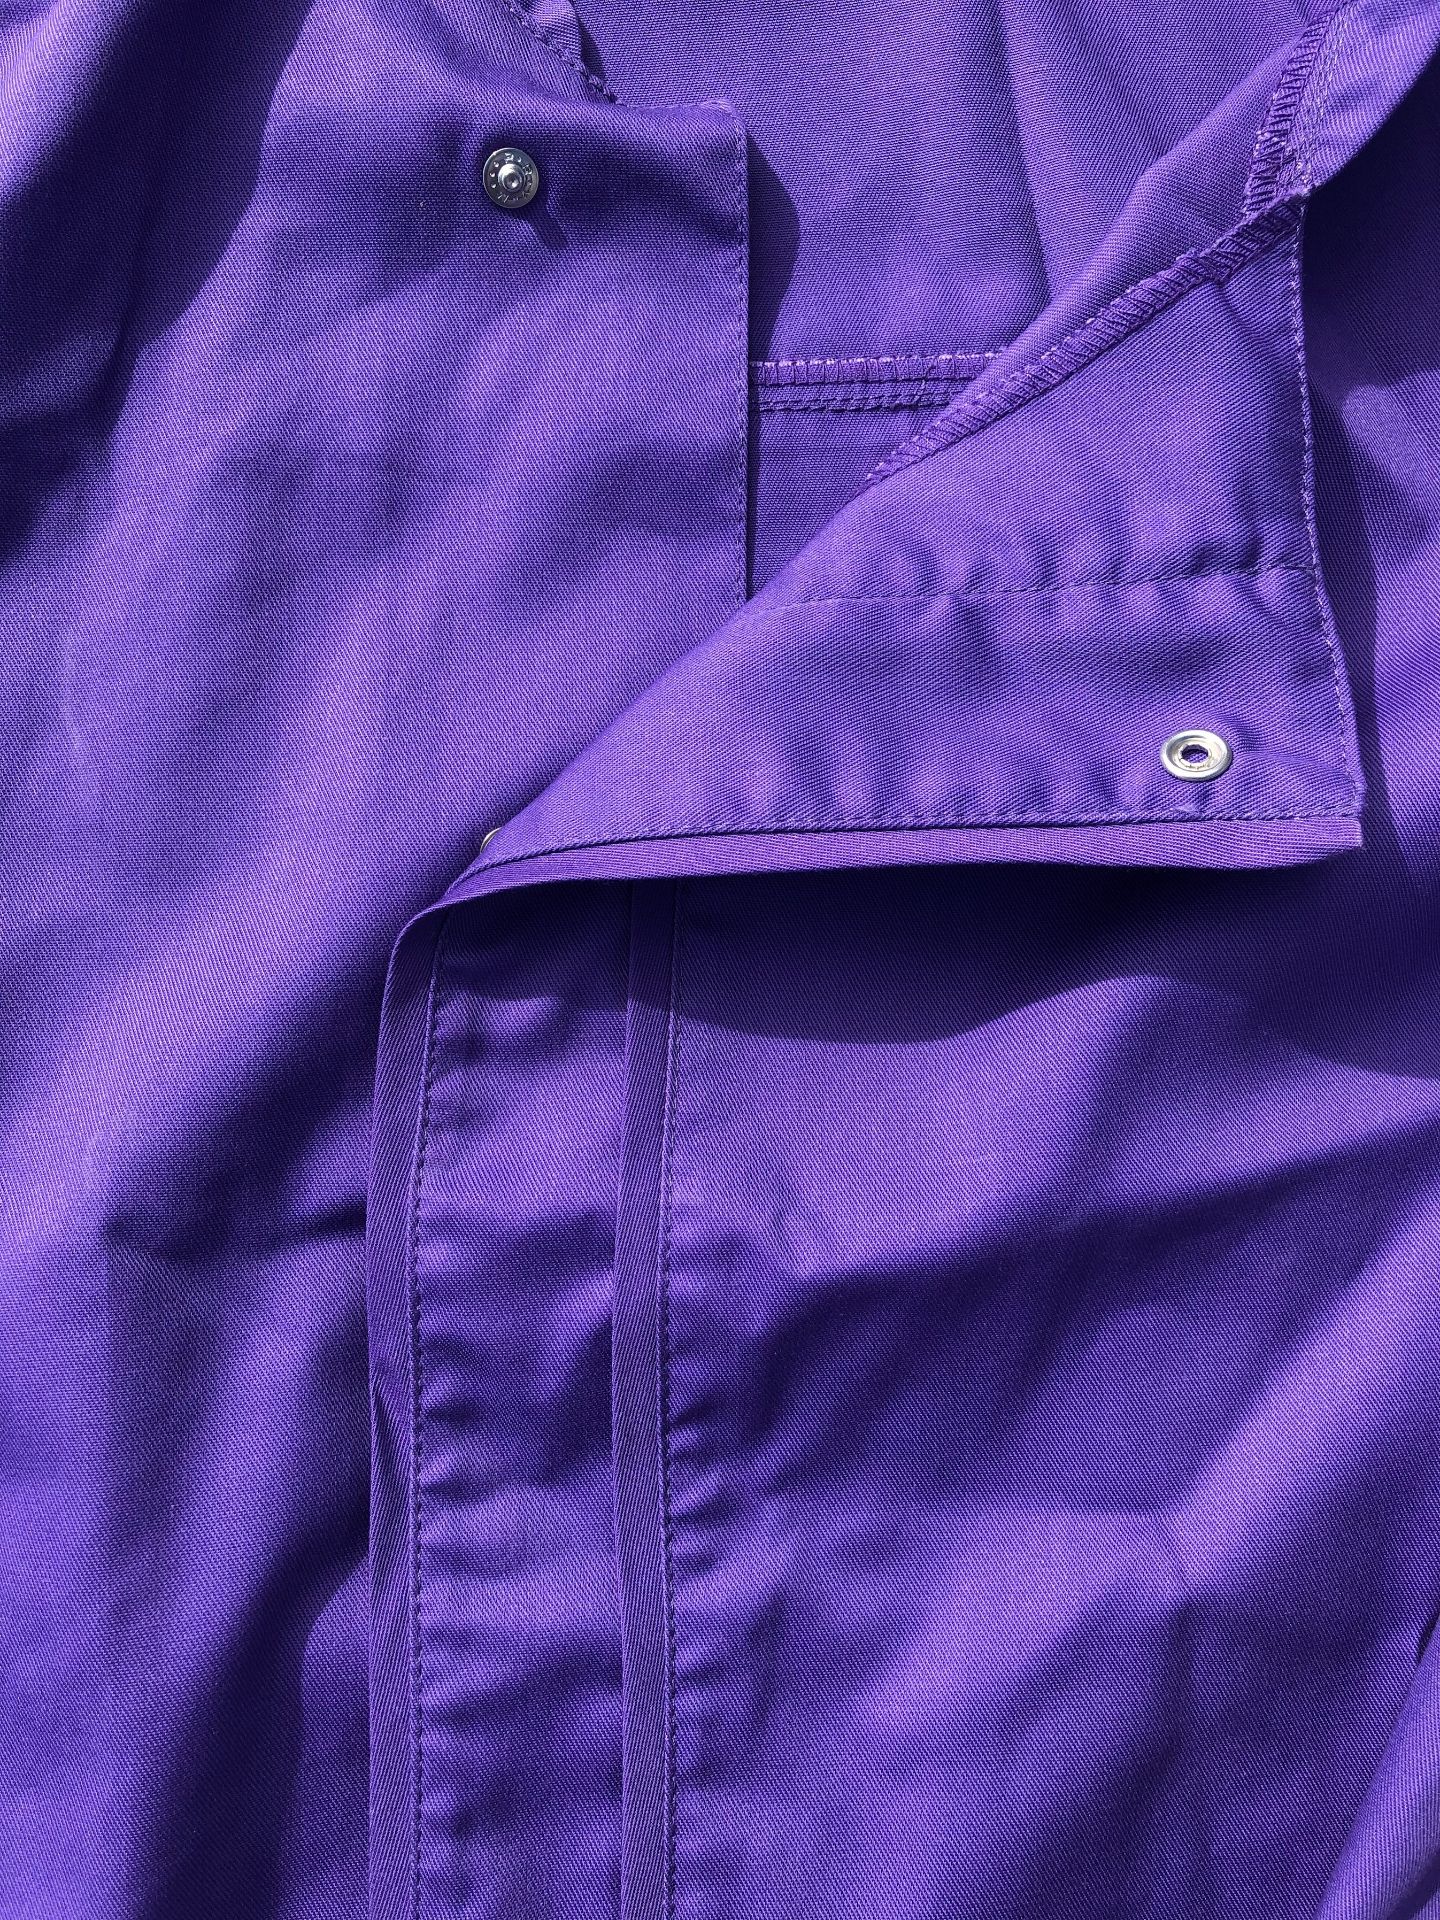 Brand new long sleeve purple chef jacket - LARGE X 10 - Image 3 of 3